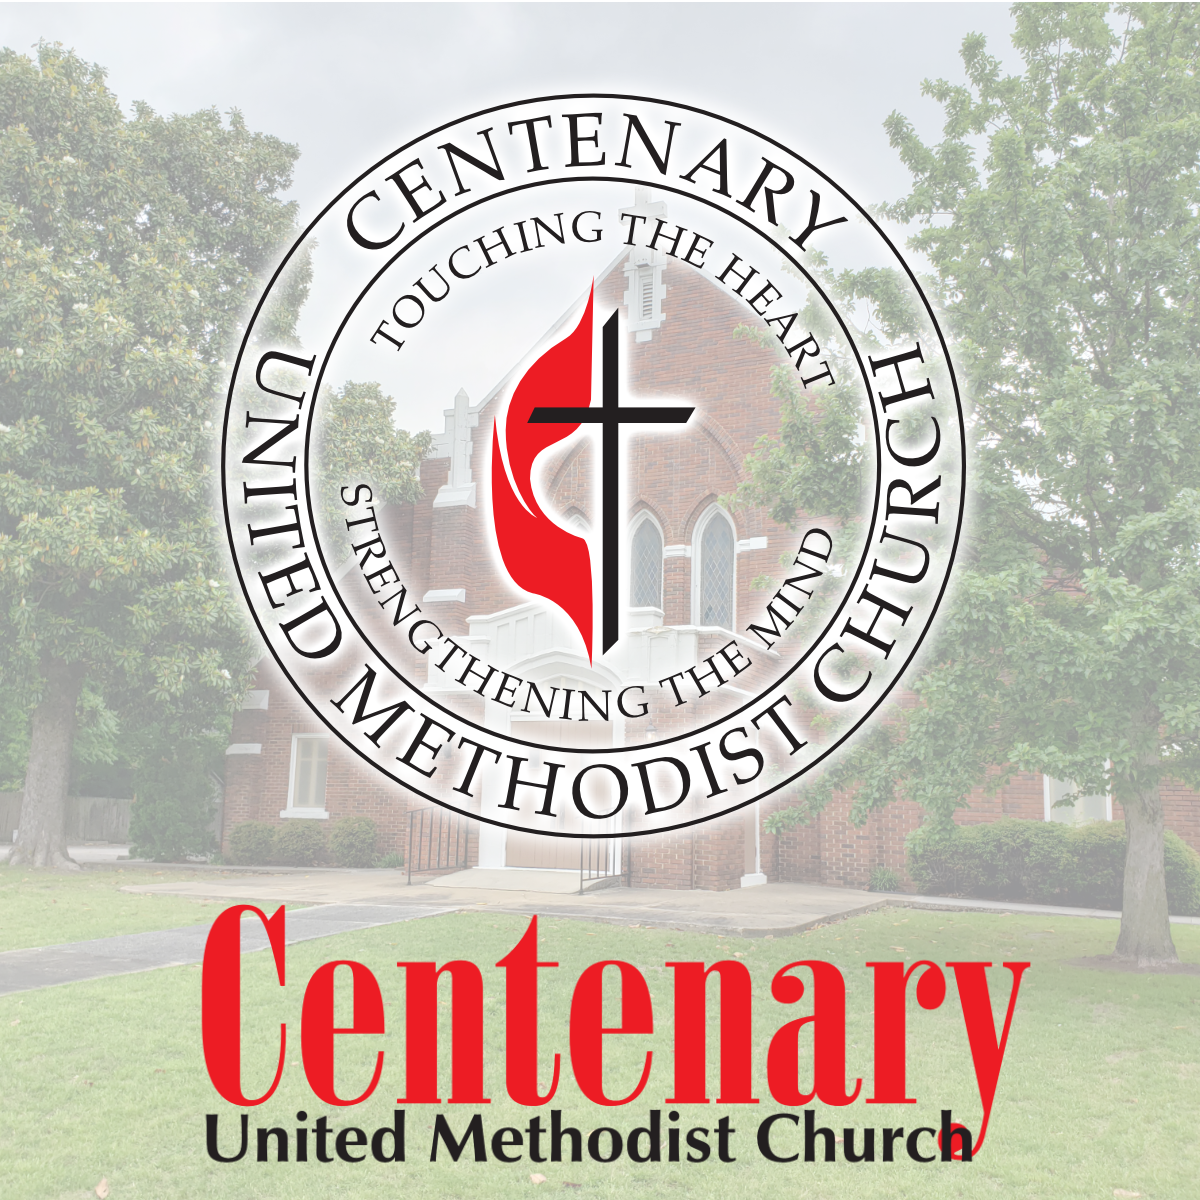 Centenary United Methodist